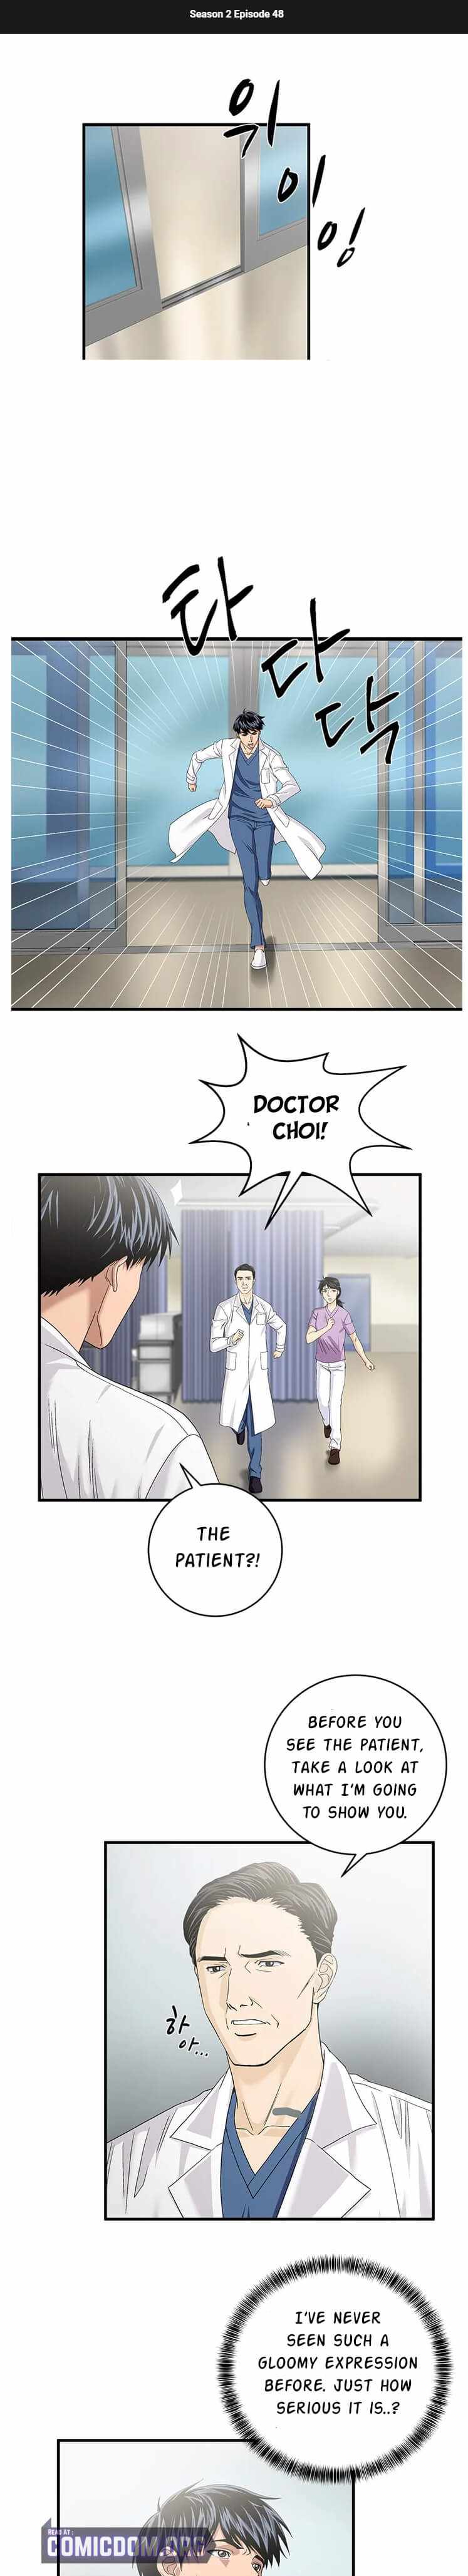 Dr. Choi Tae-Soo - Page 2